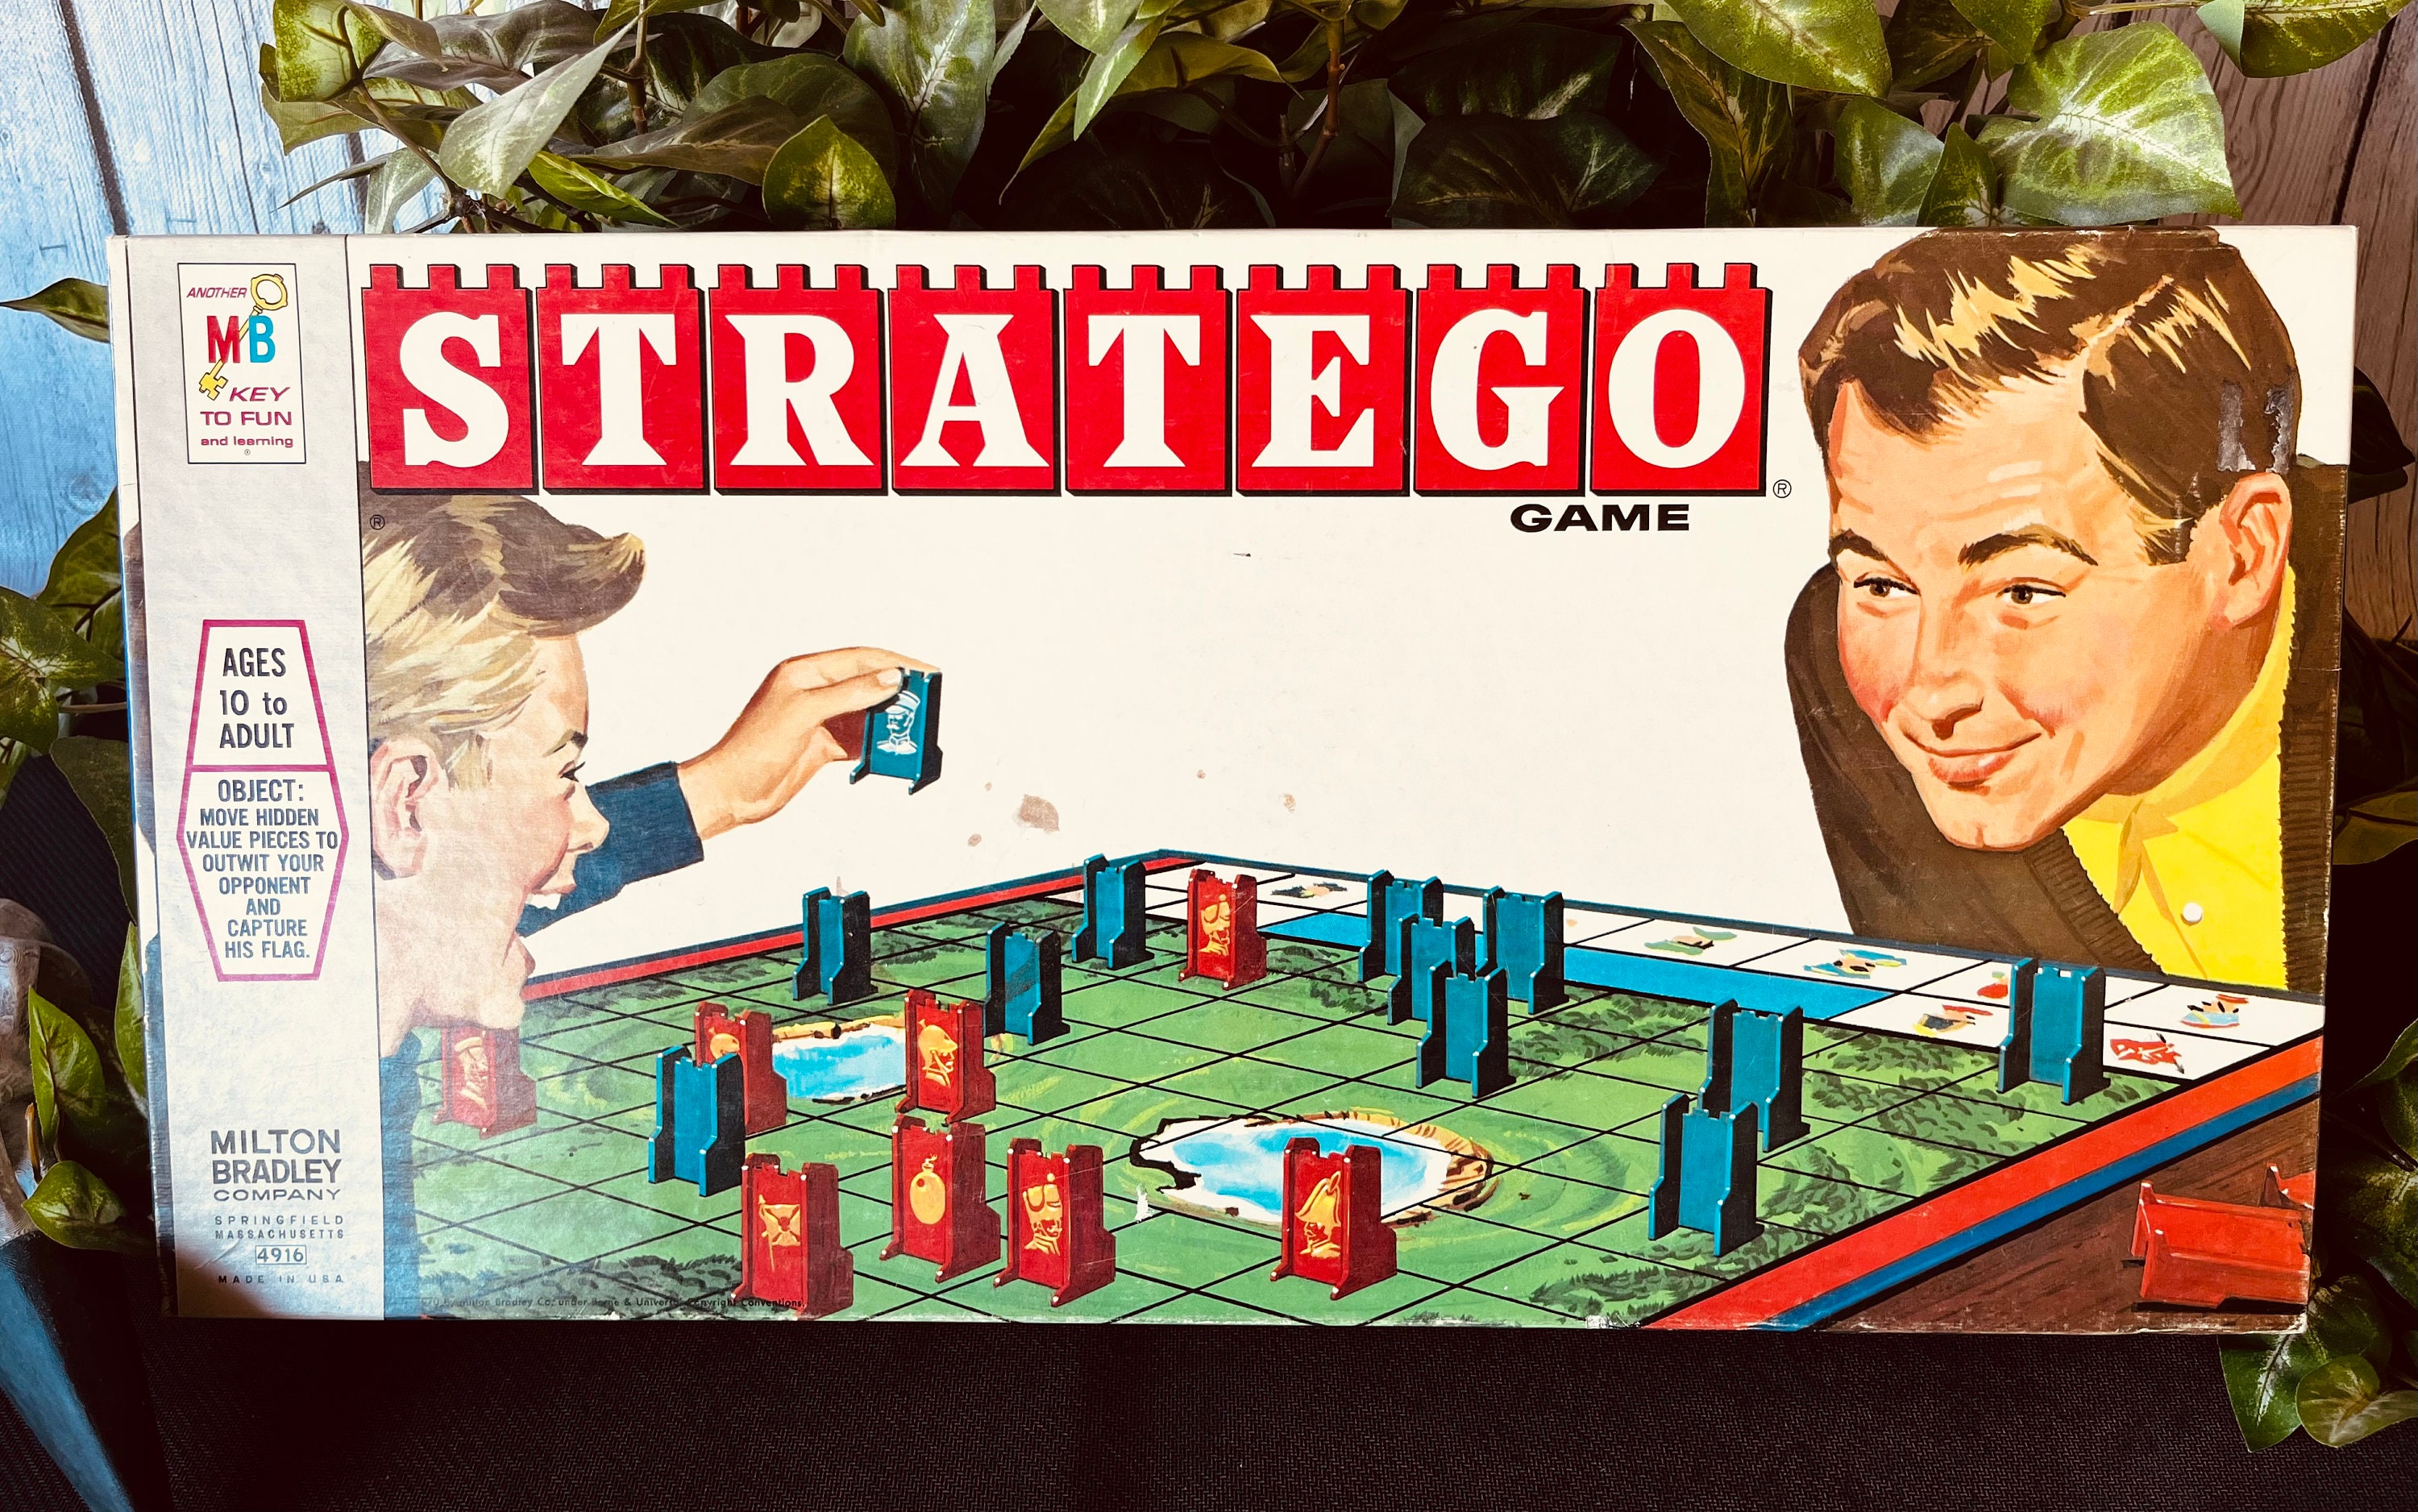 Stratego Original Edition - Mind Games USA